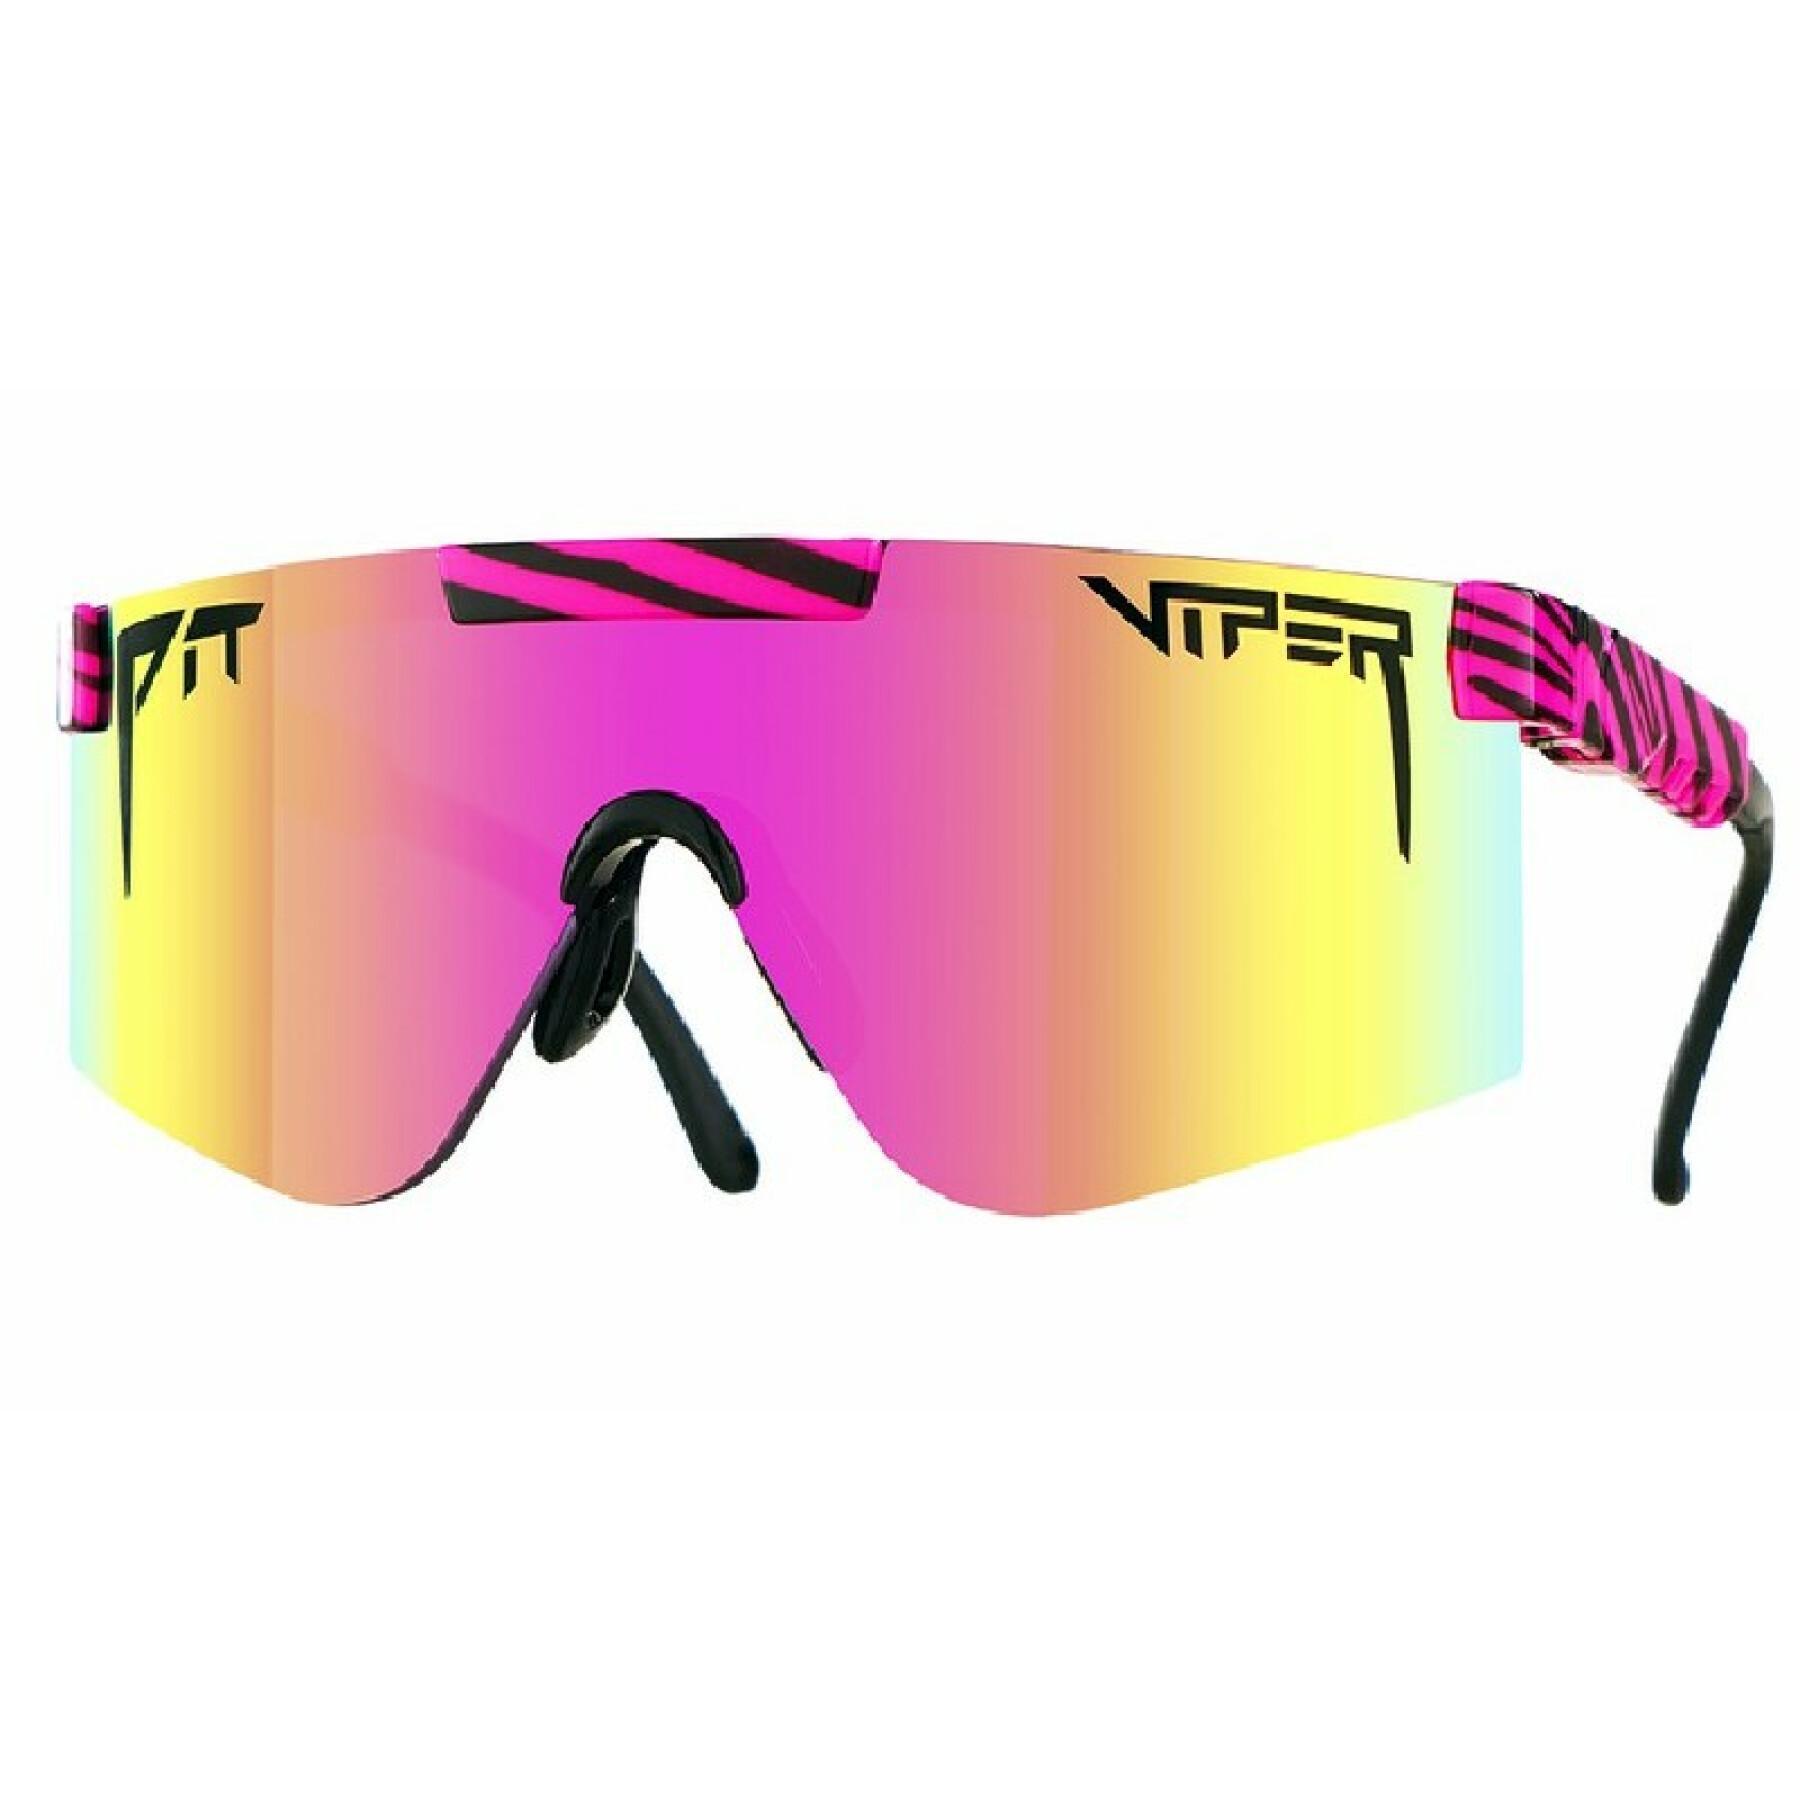 Polarized sunglasses Pit Viper The Hot Tropics 2000